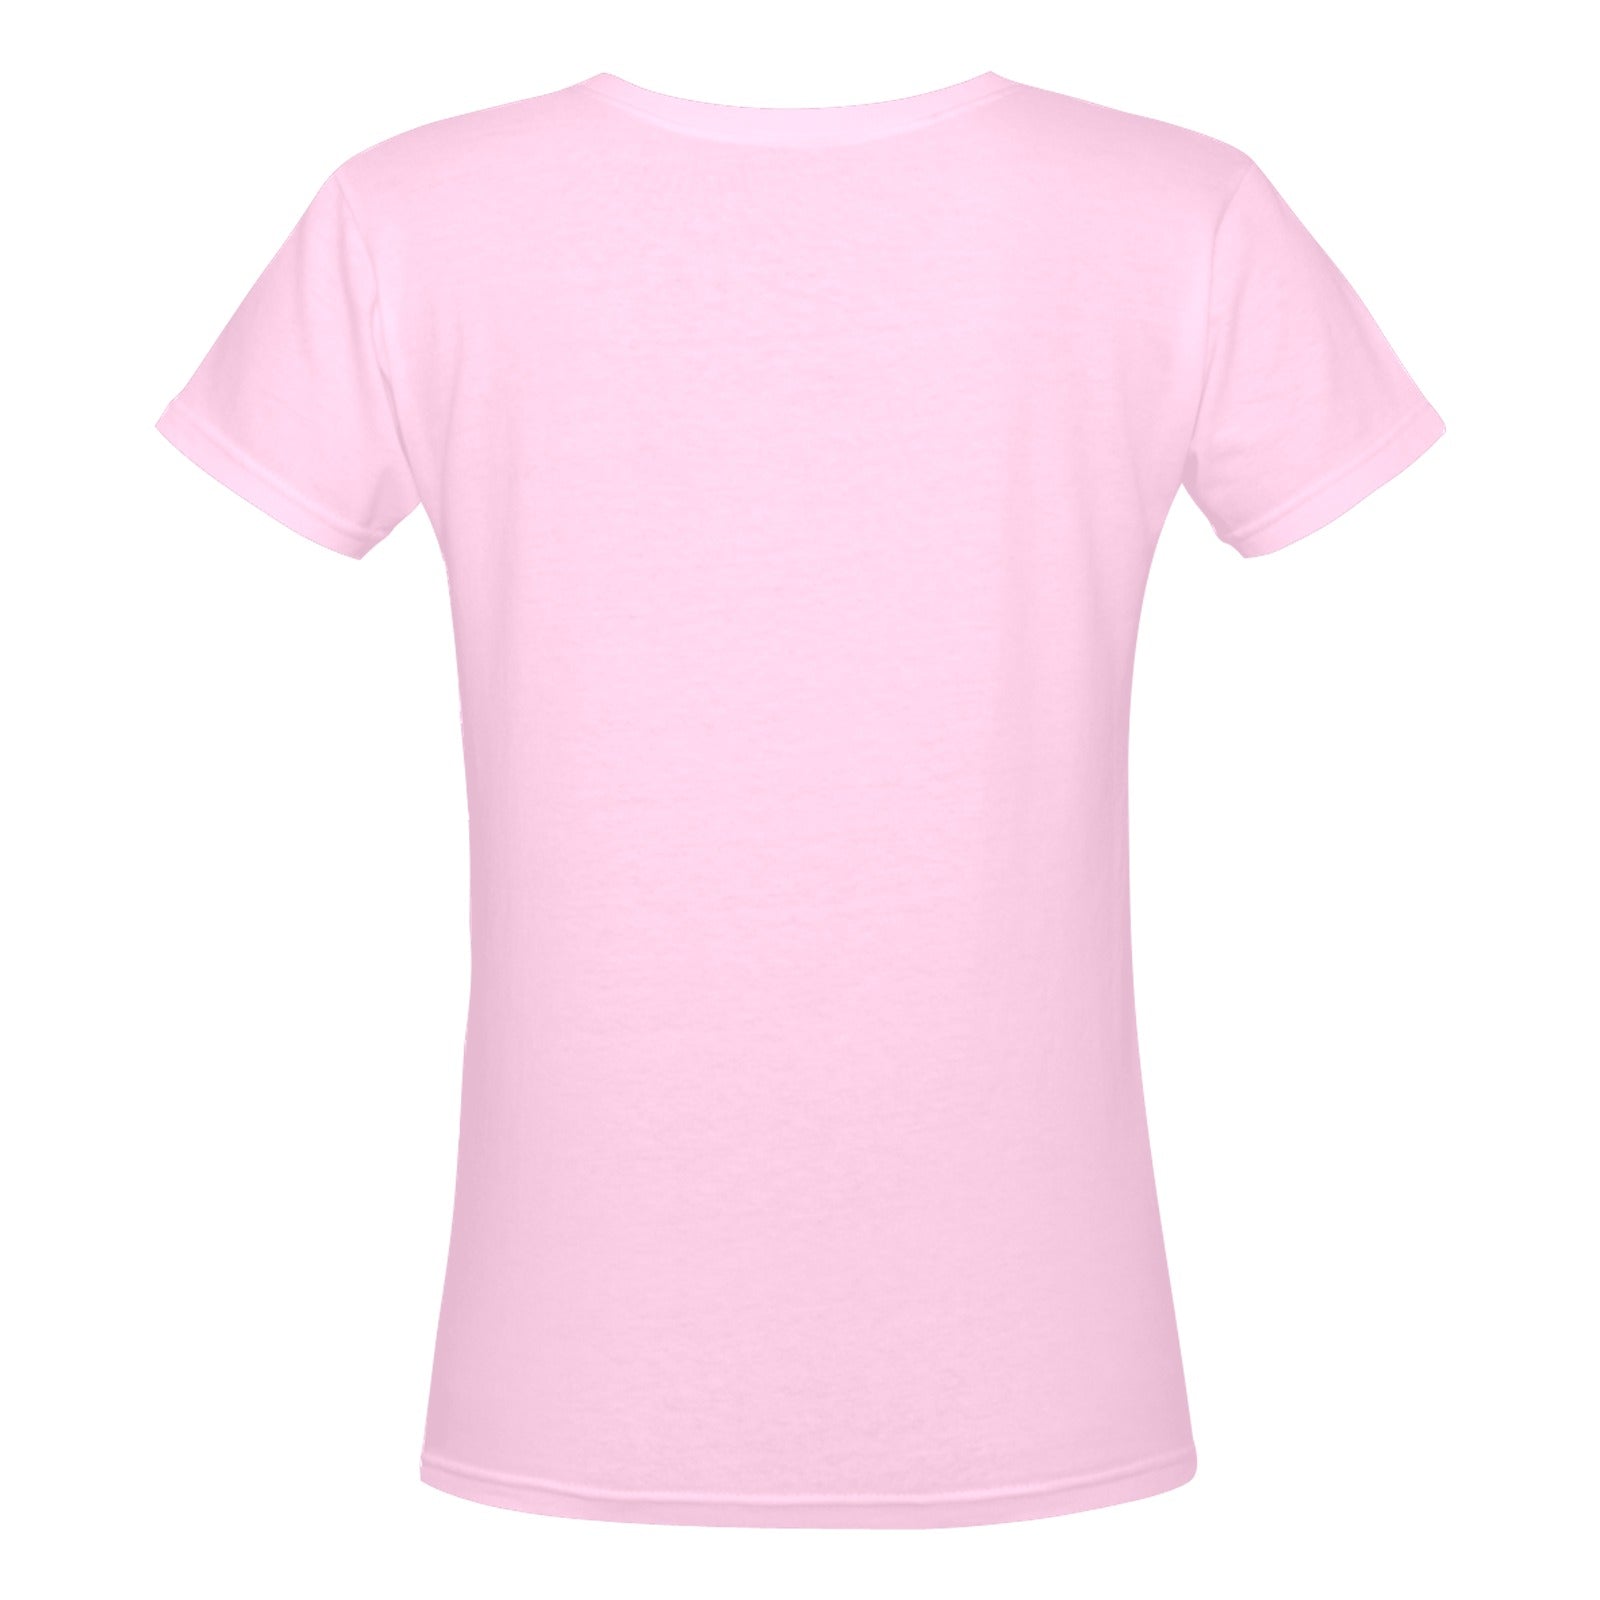 Face Painting T Shirt Light Pink